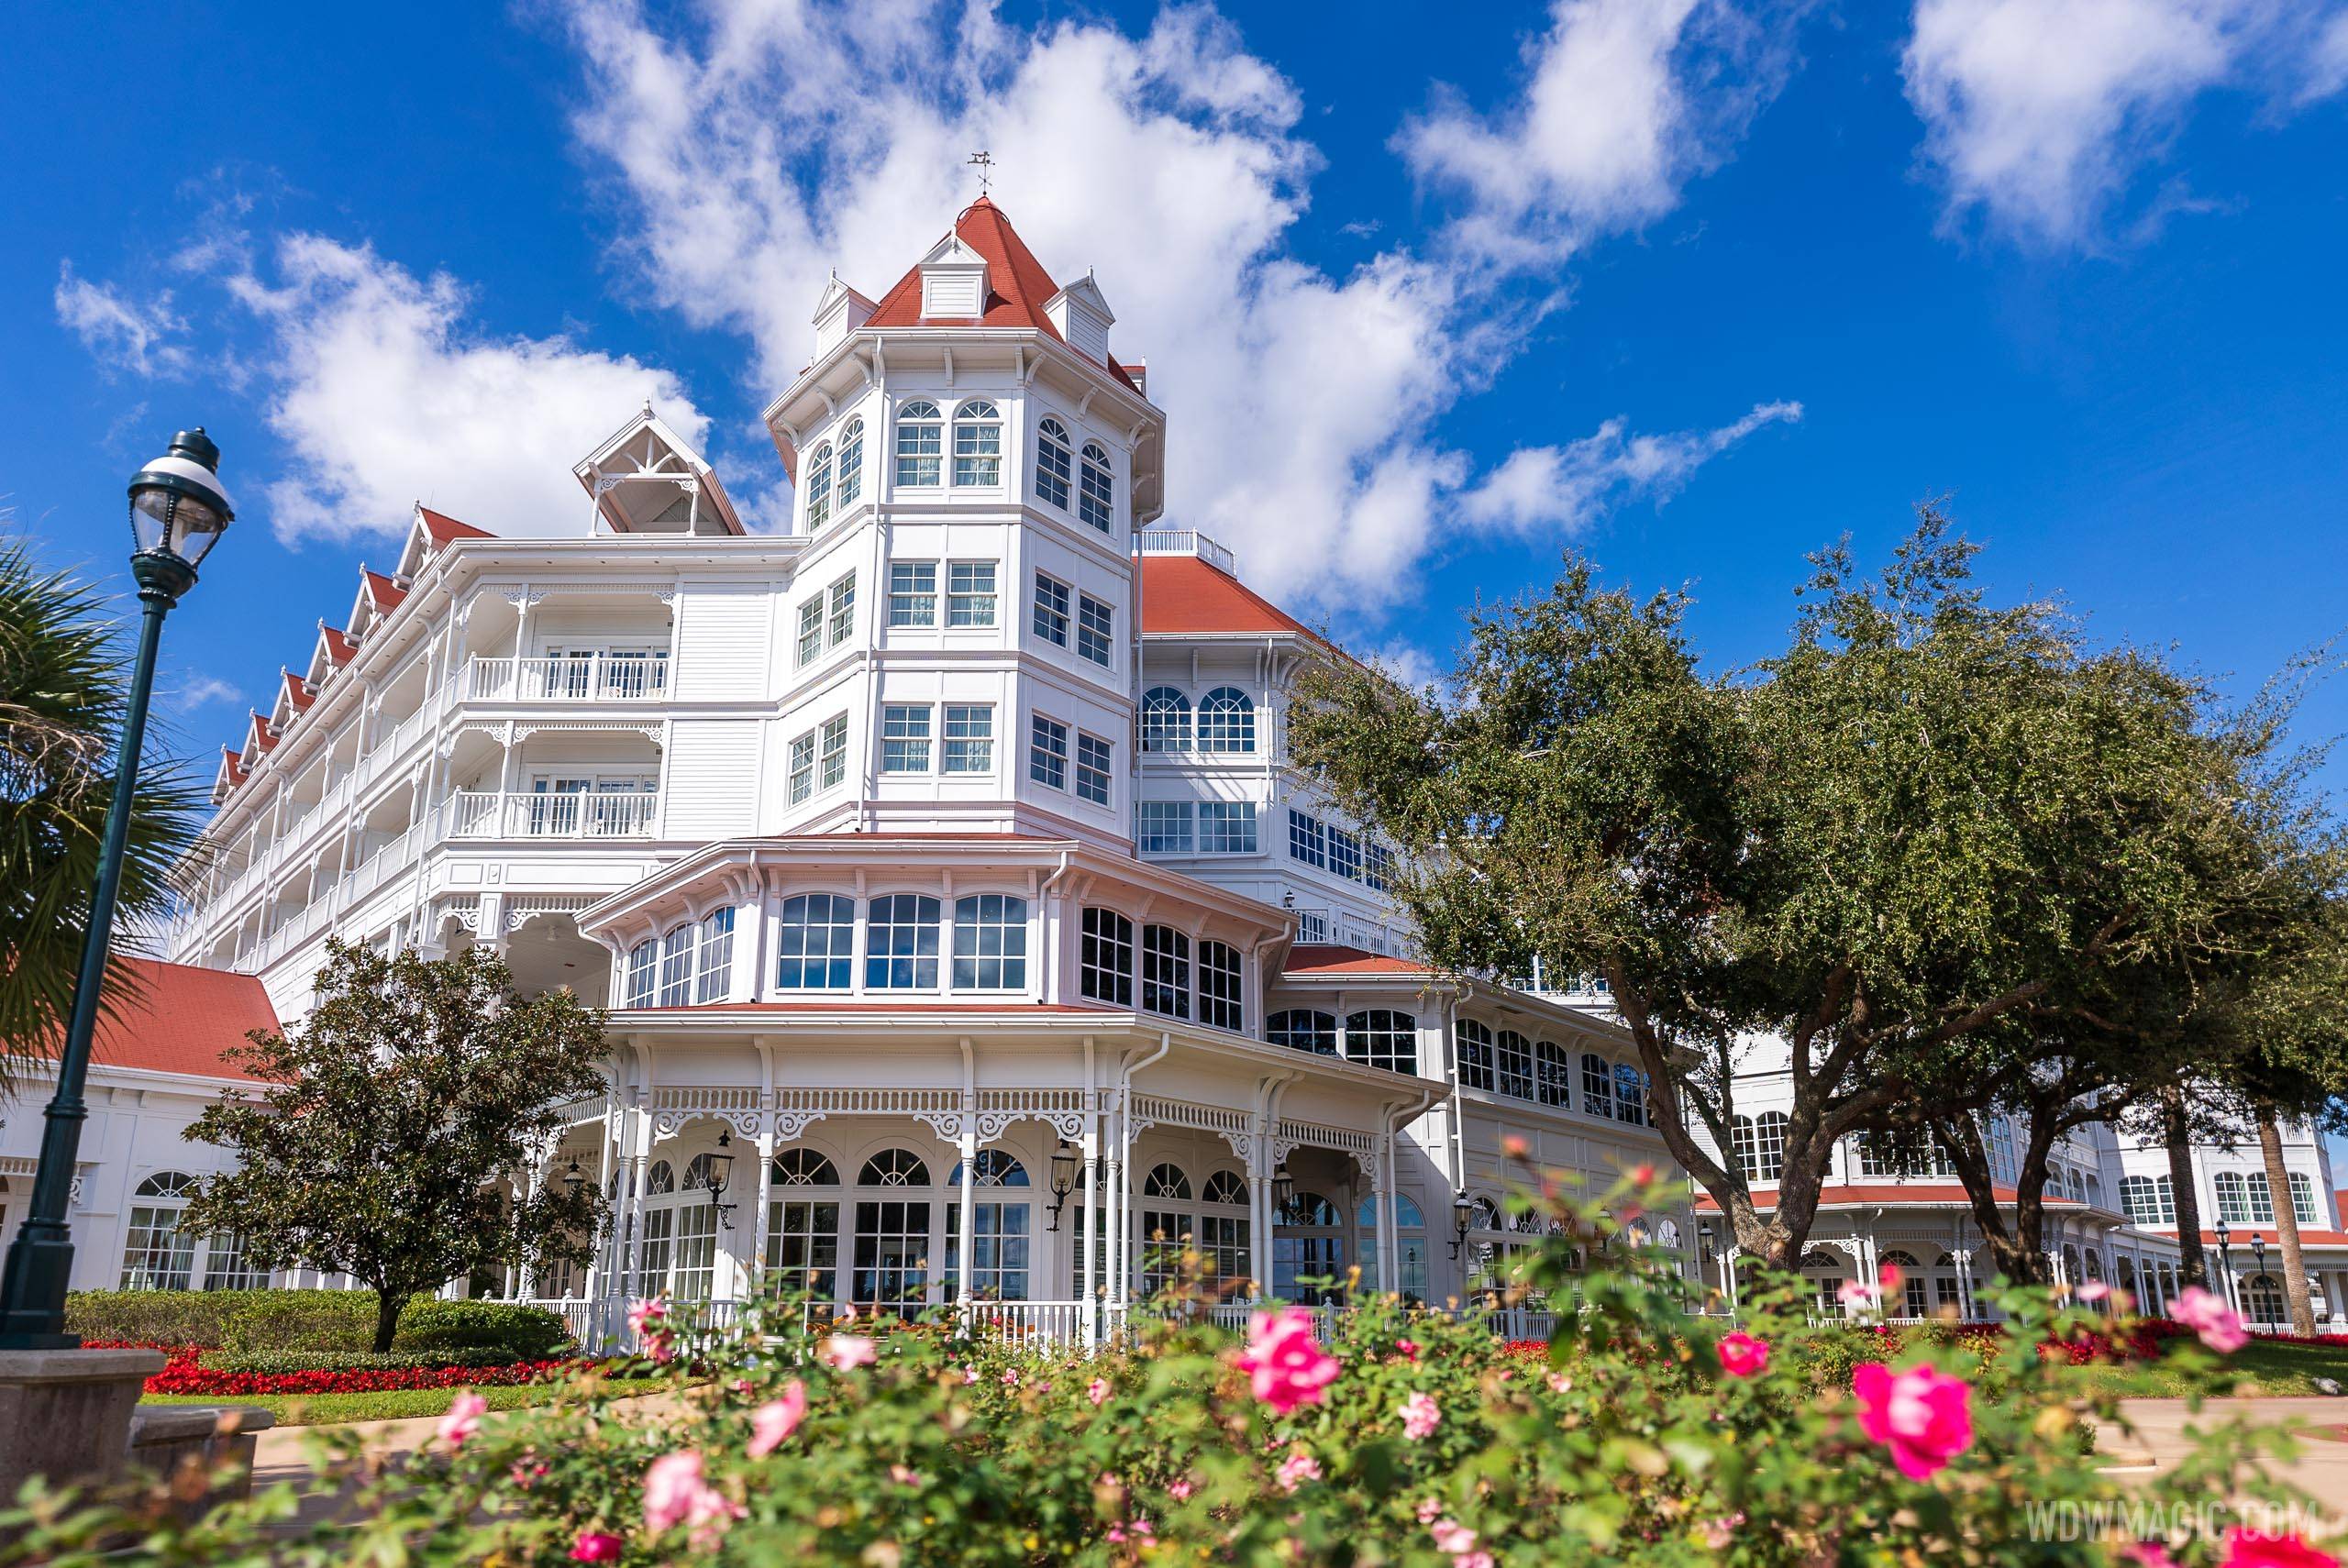 Disney's Grand Floridan Resort overview